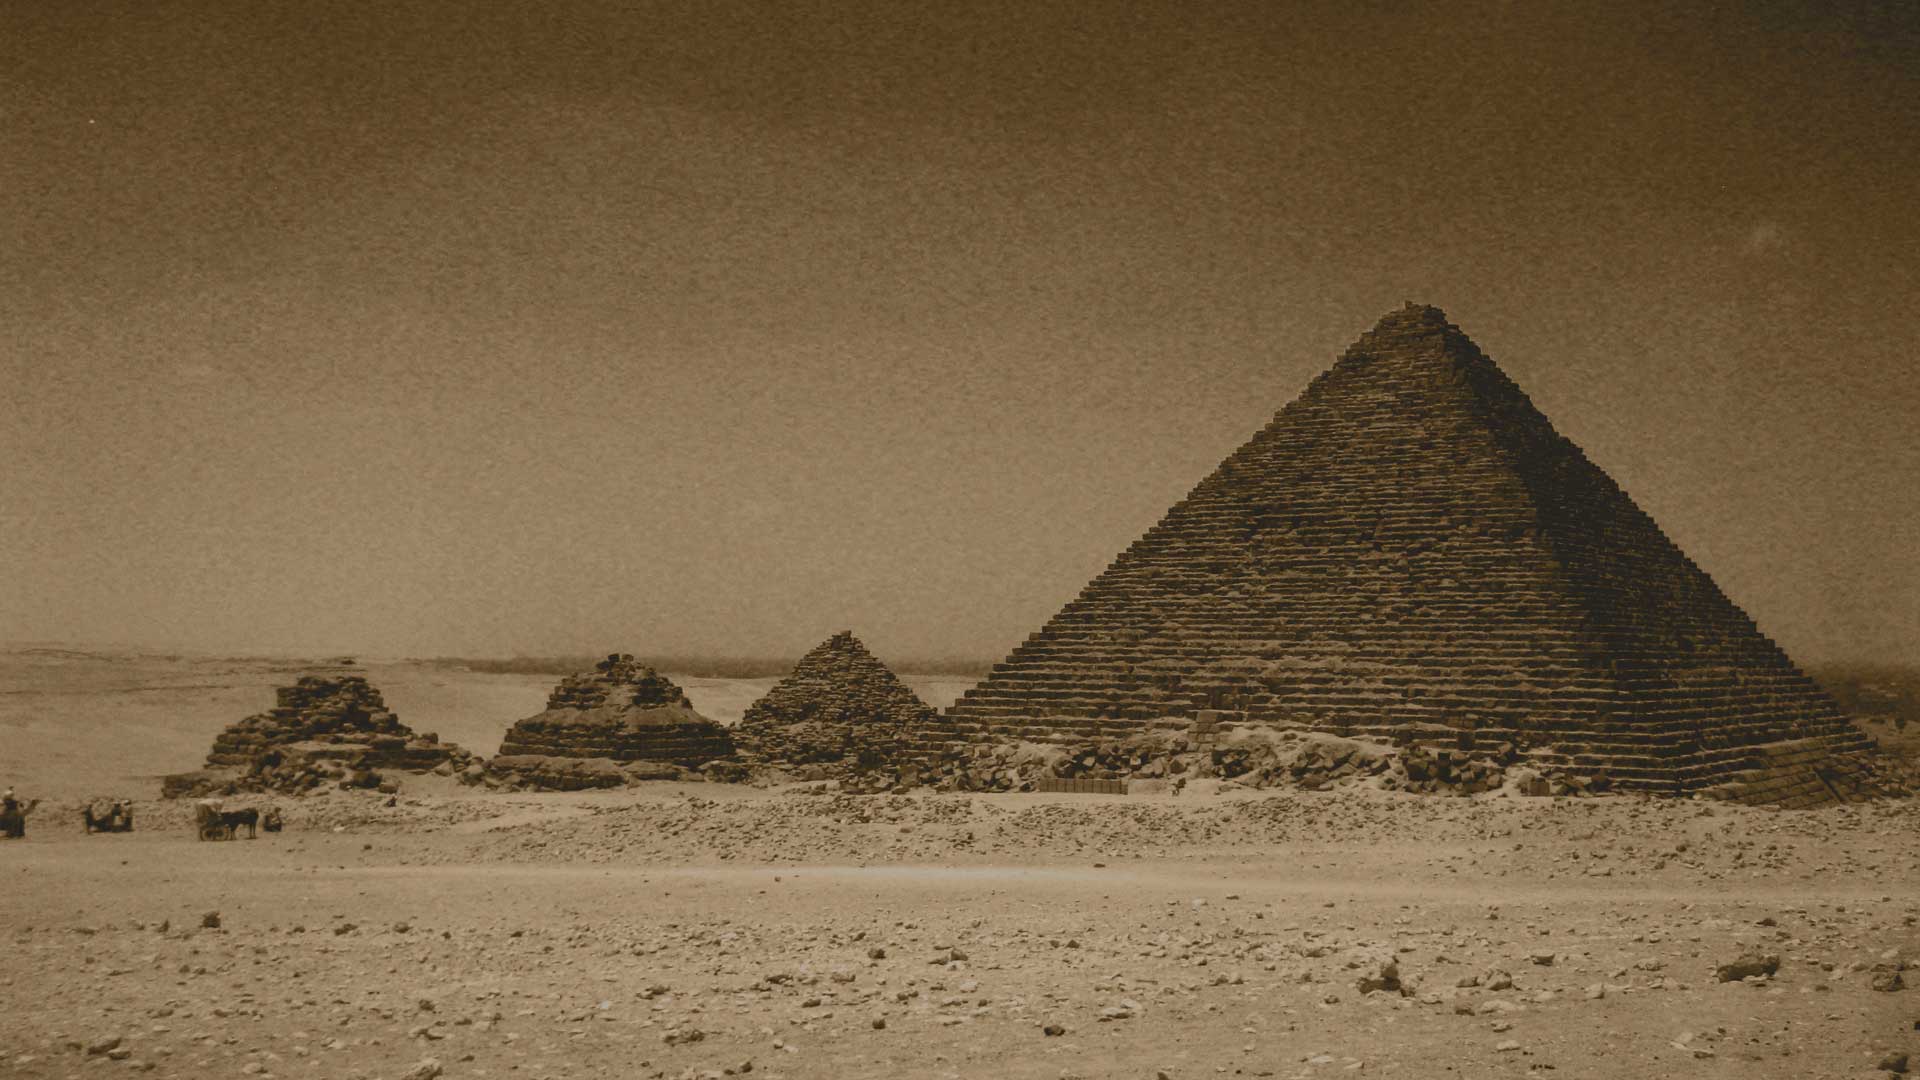 in cairo and alexandria, jamsetji visited the pyramids